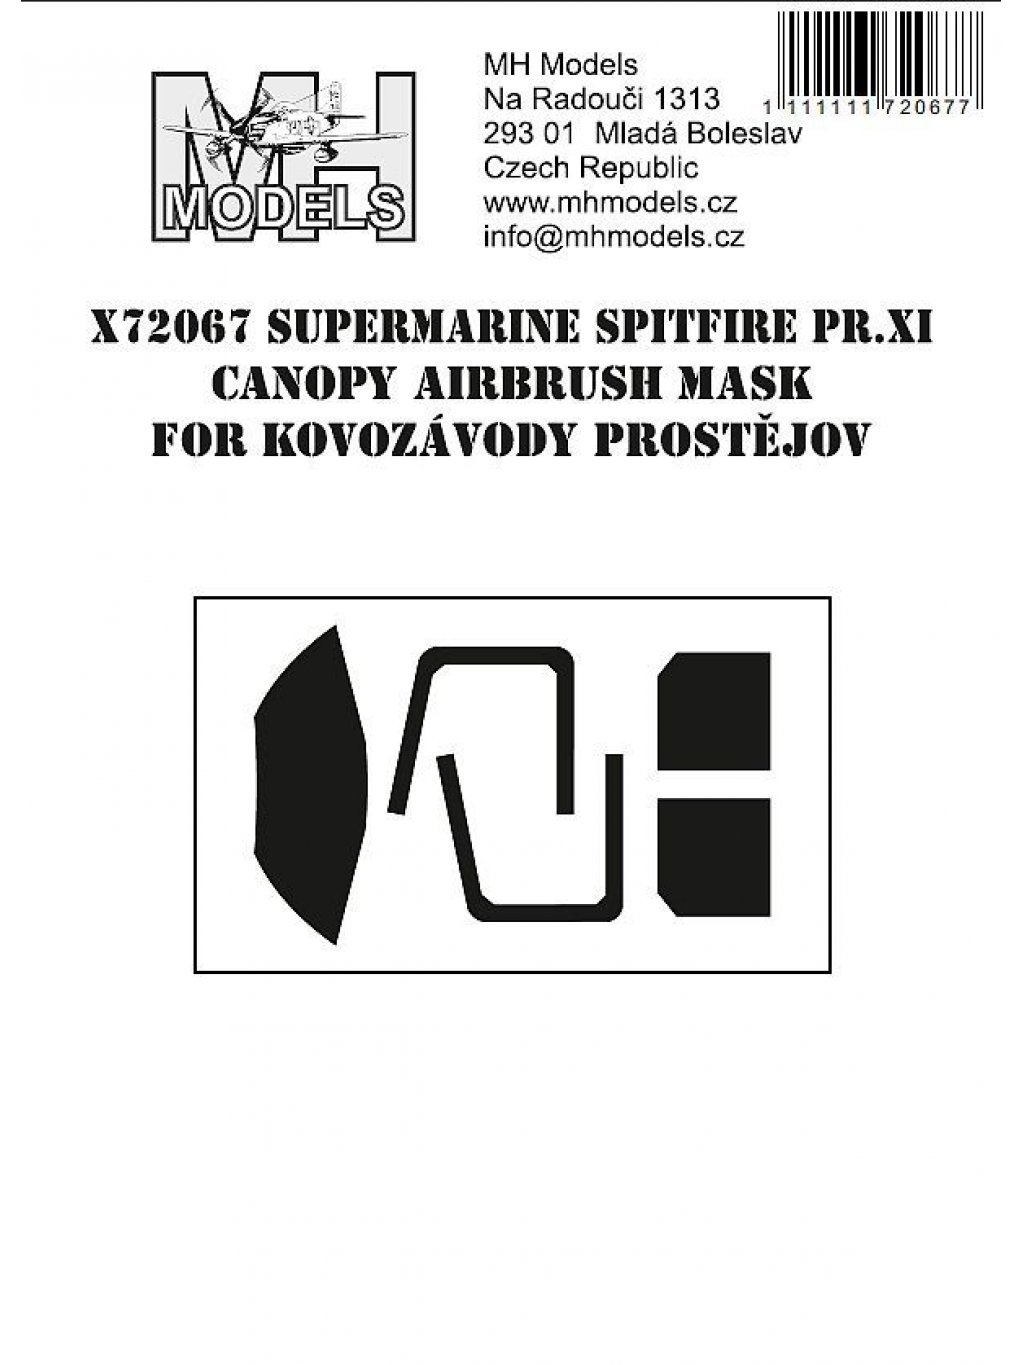 Supermarine Spitfire PR.XI canopy airbrush mask for Kovozávody Prostějov